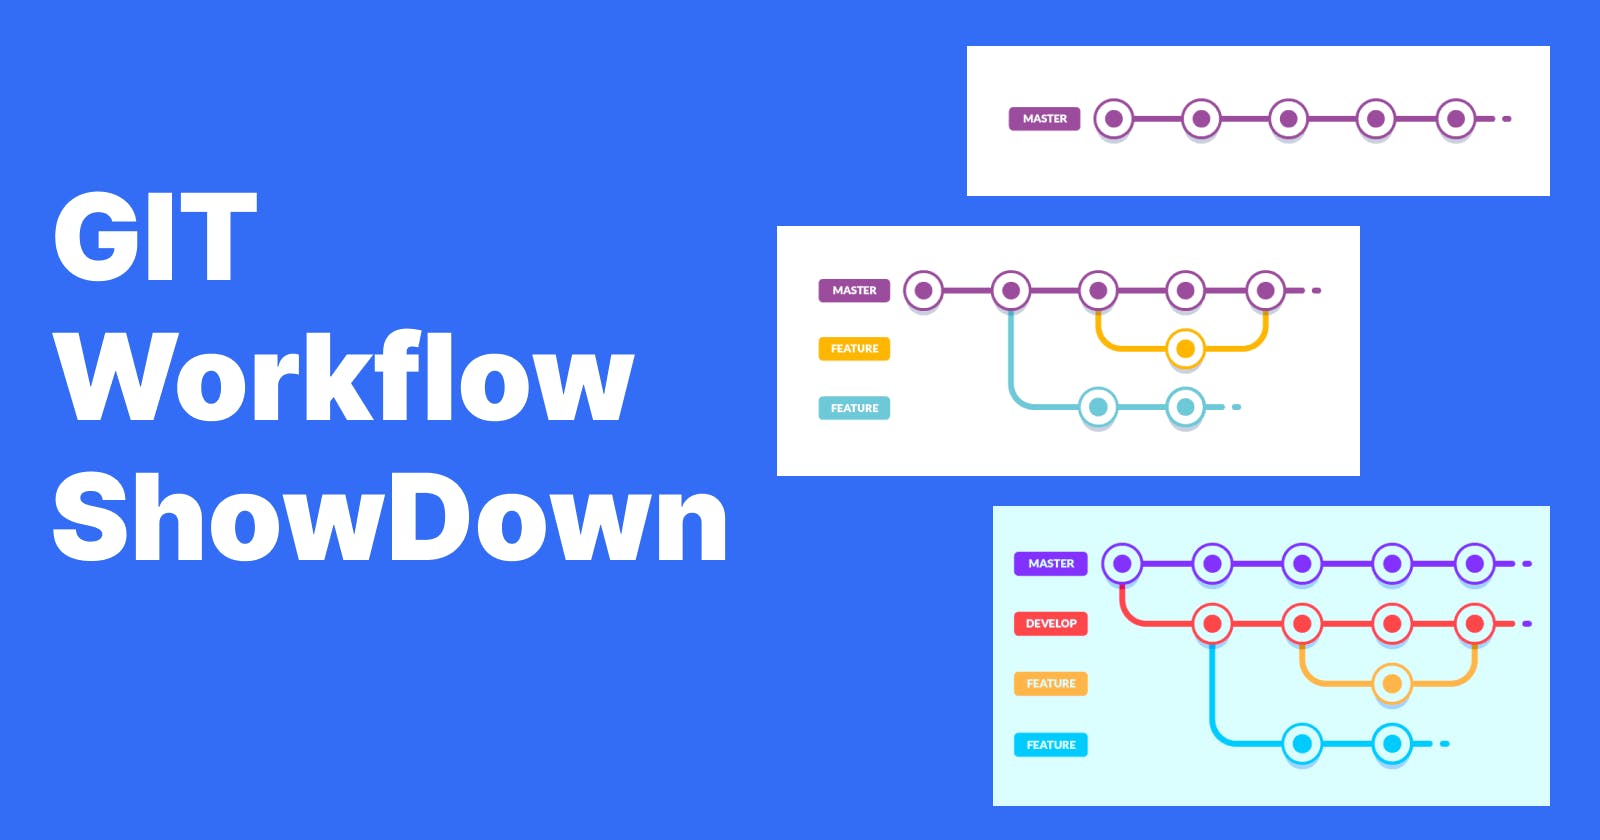 Git Workflow Showdown: A Comparison